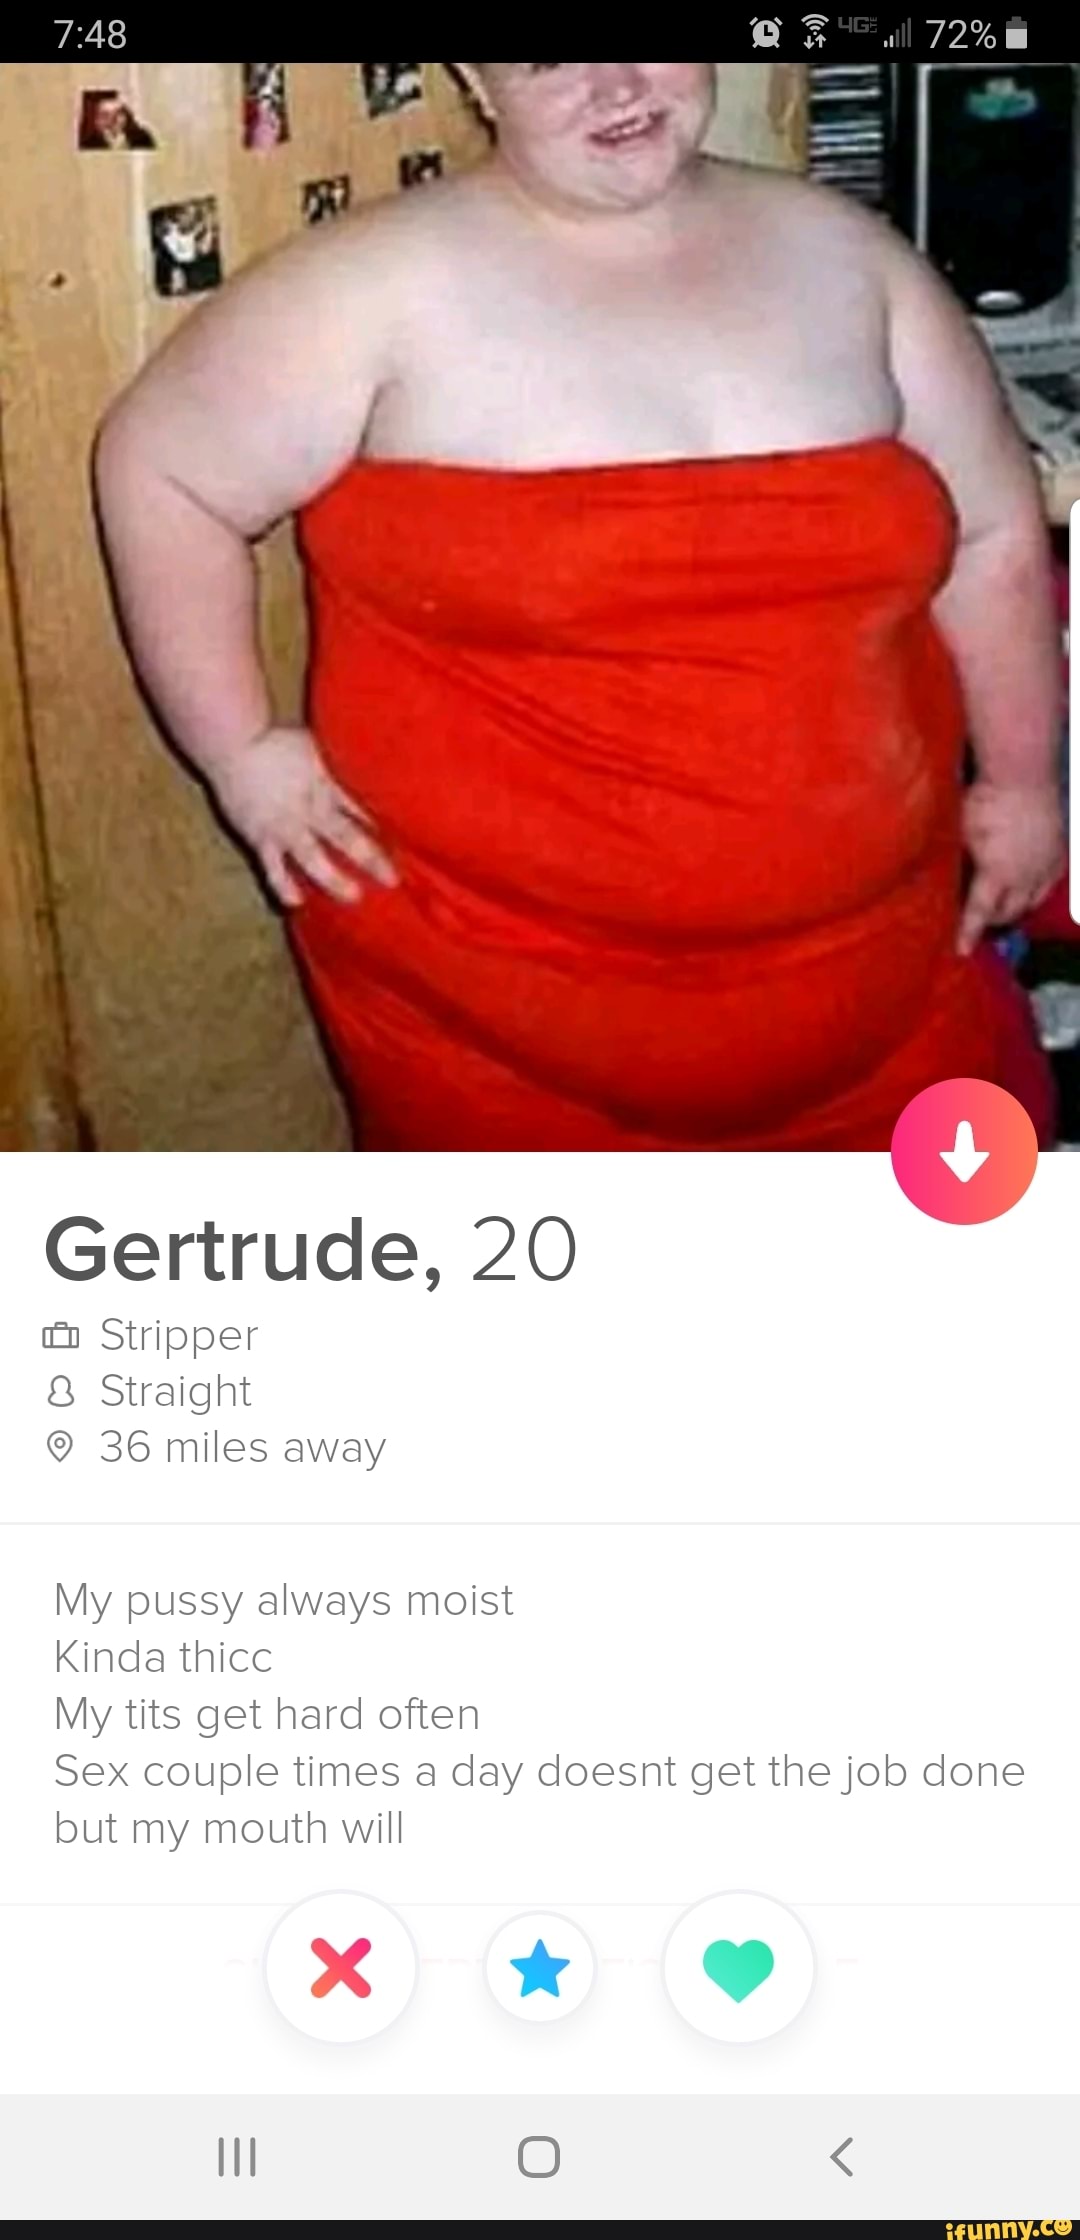 Gertrude, 20 Stripper © 36 miles away l\/Iy pussy always moist